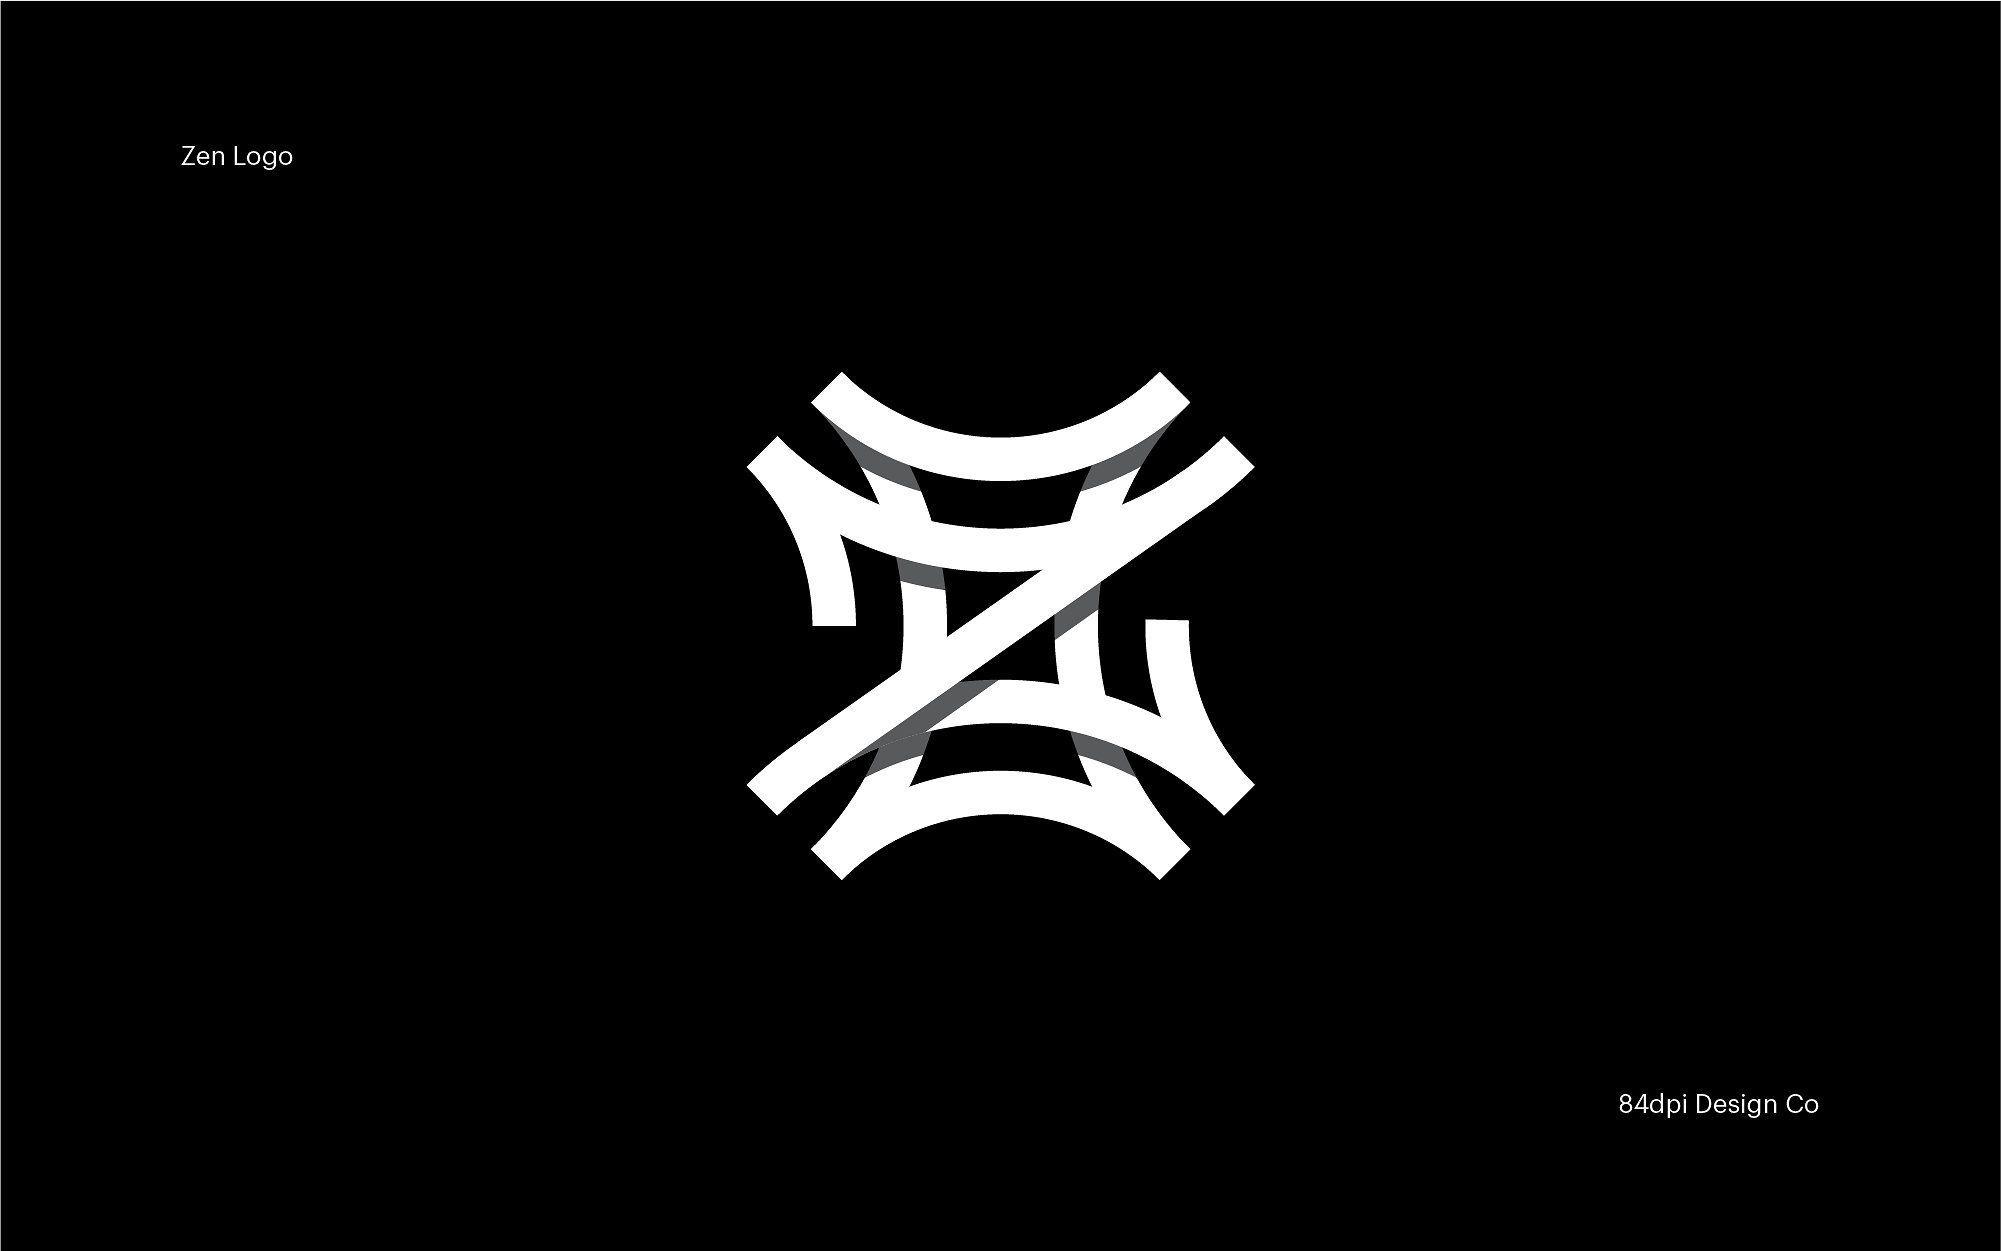 MX Logo - Z is for Zen Logo Template by Design Union Mx on @creativemarket ...